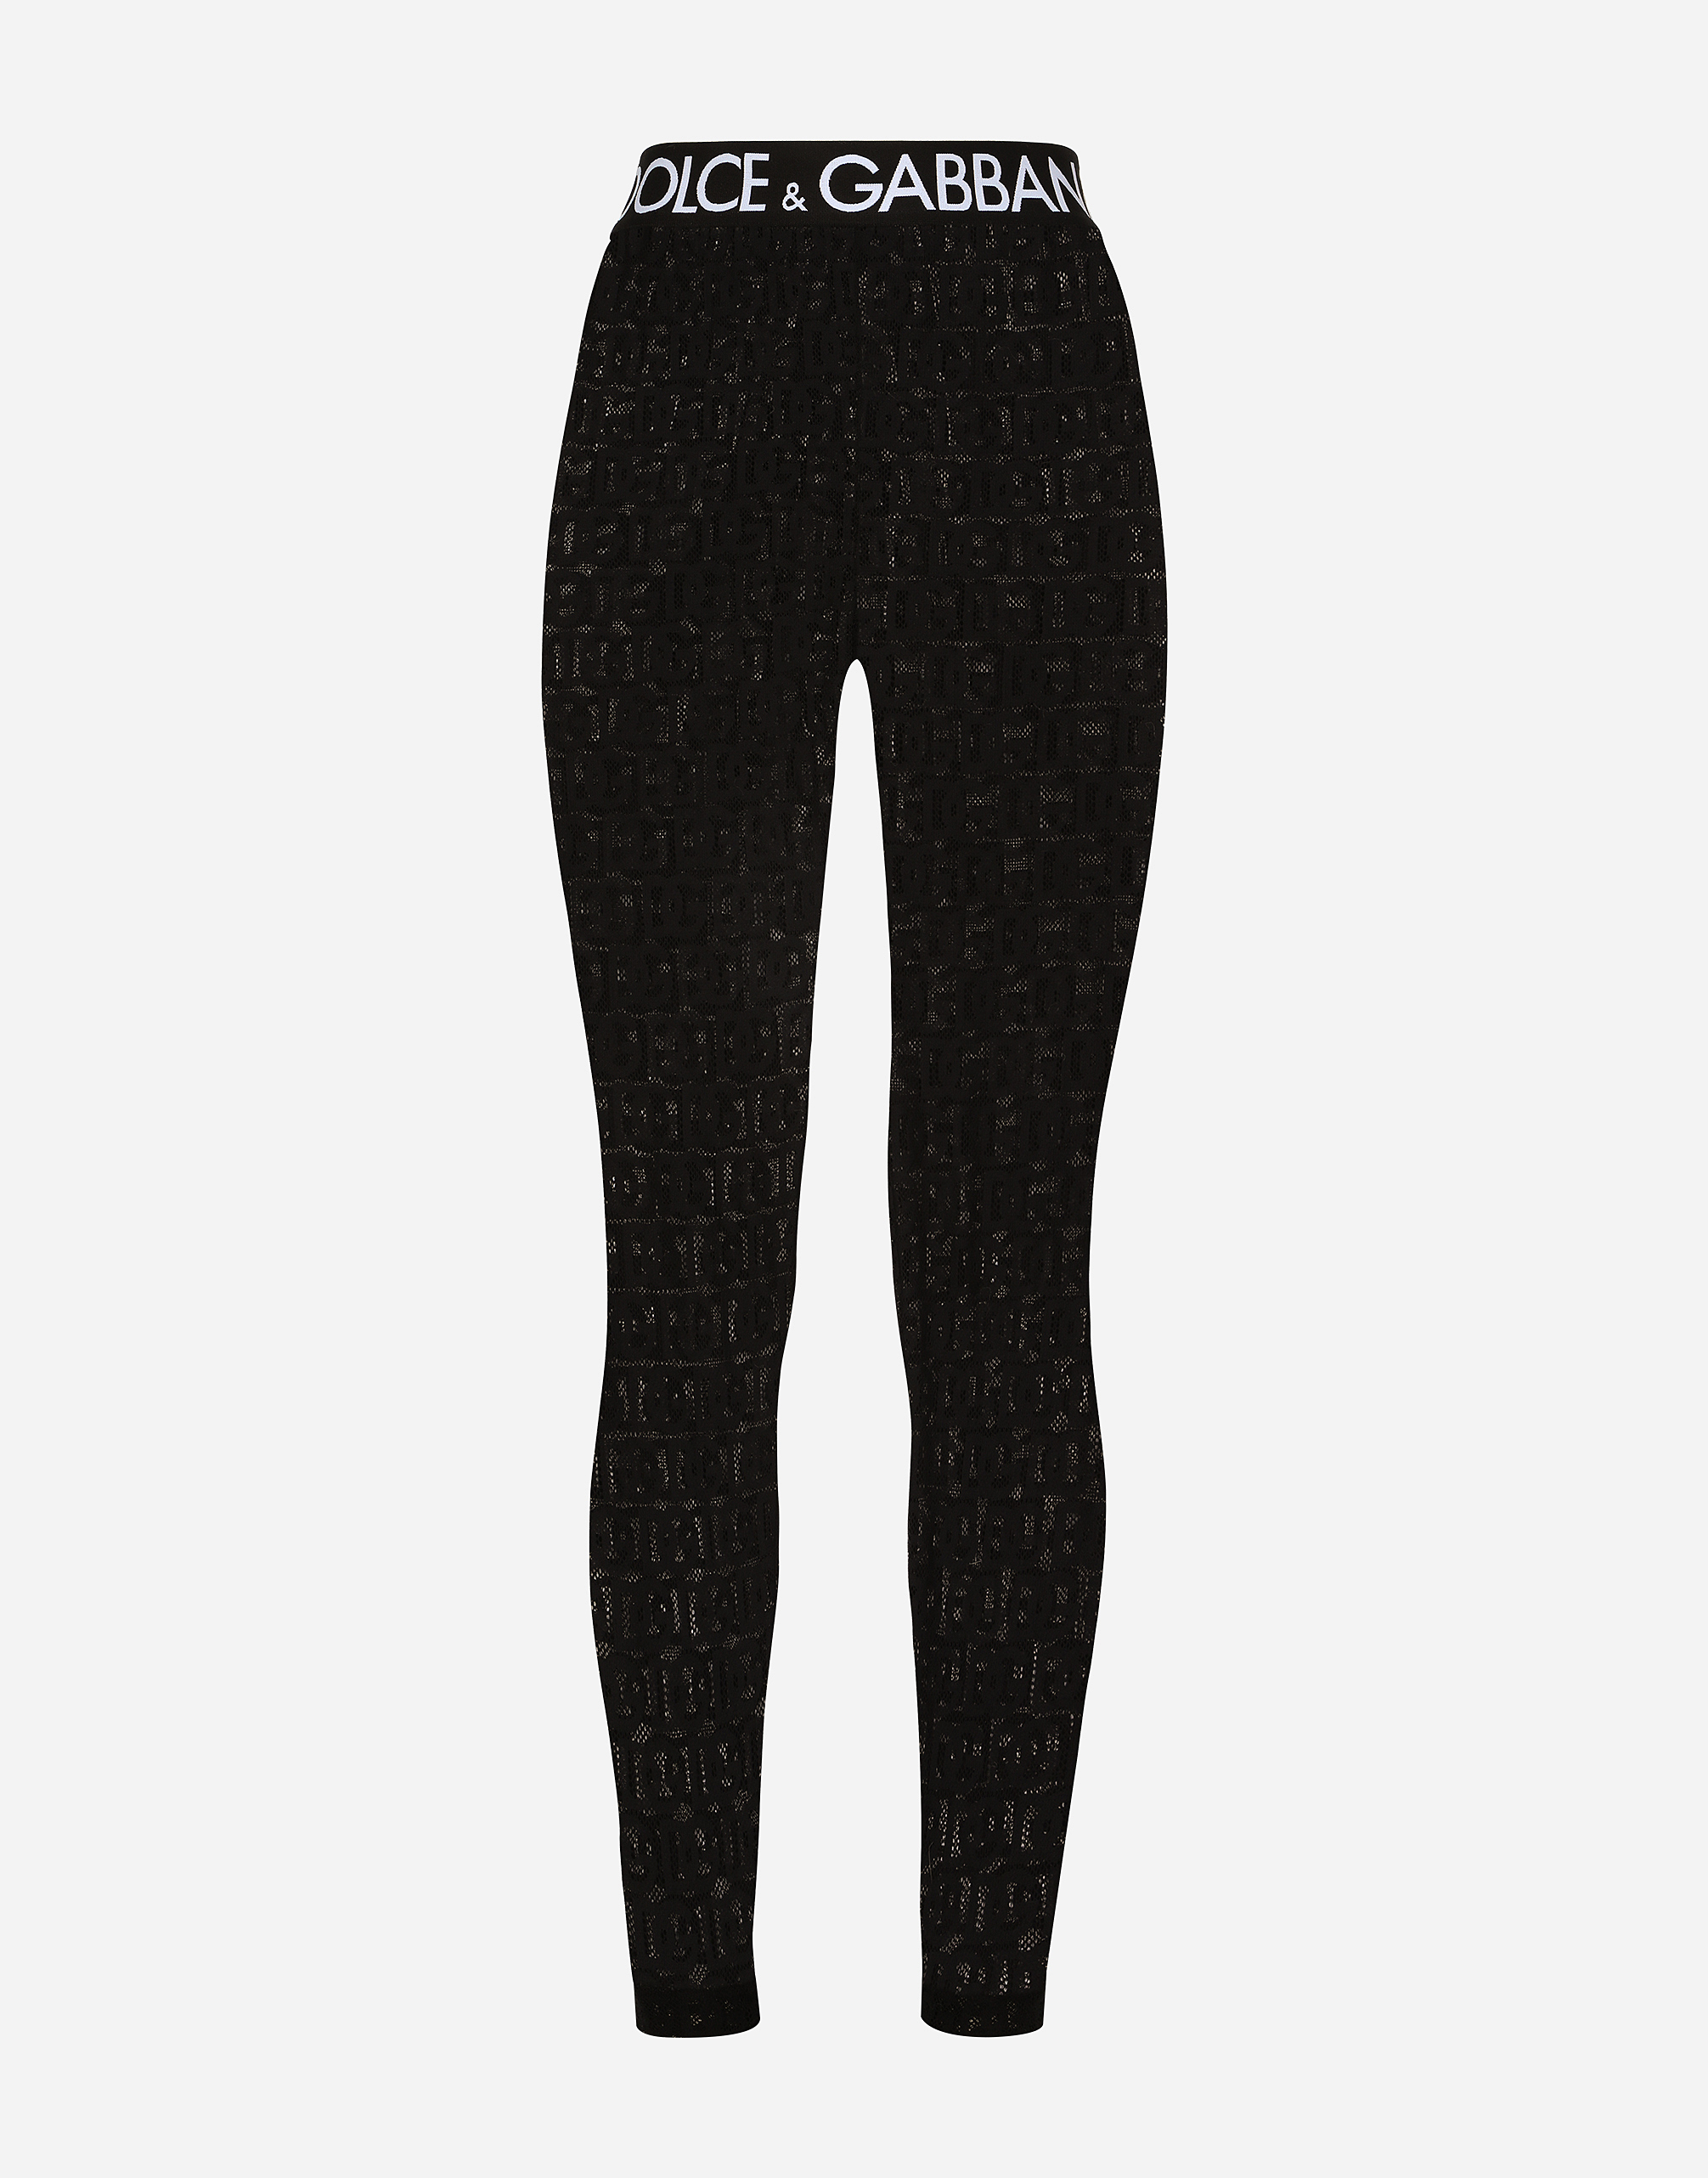 Jacquard tulle leggings with branded elastic in Black